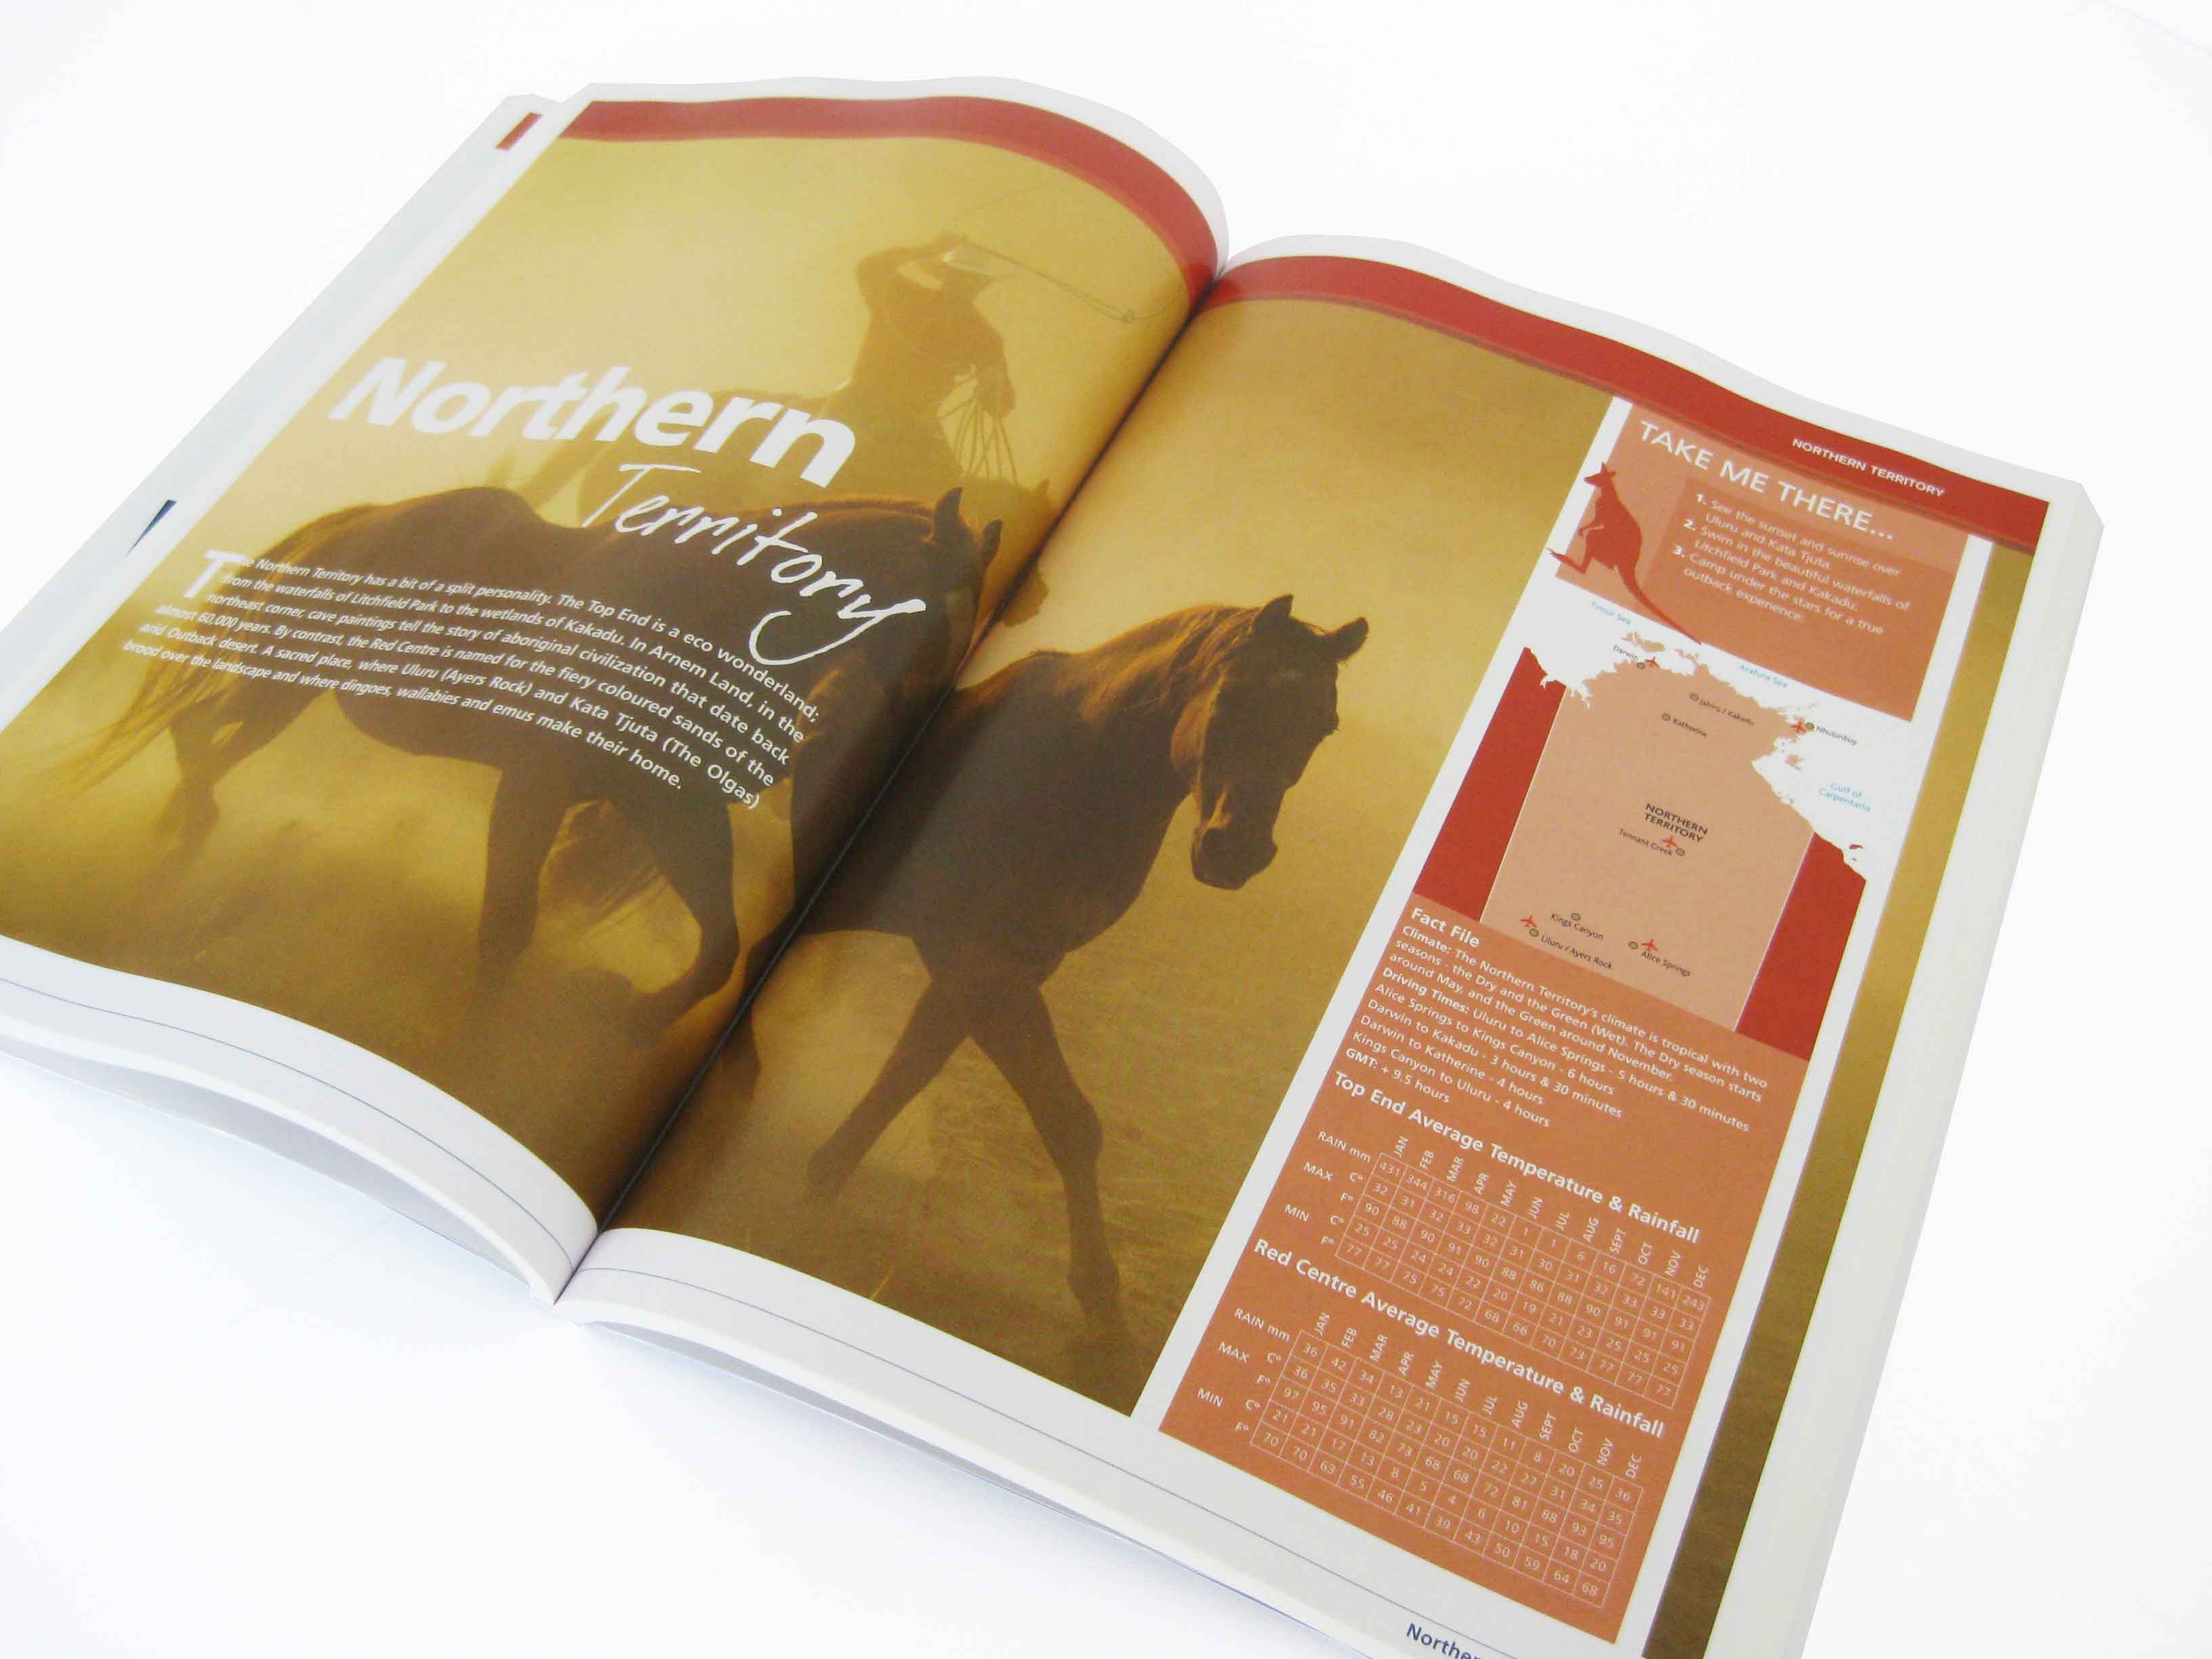 Austravel brochure spread2